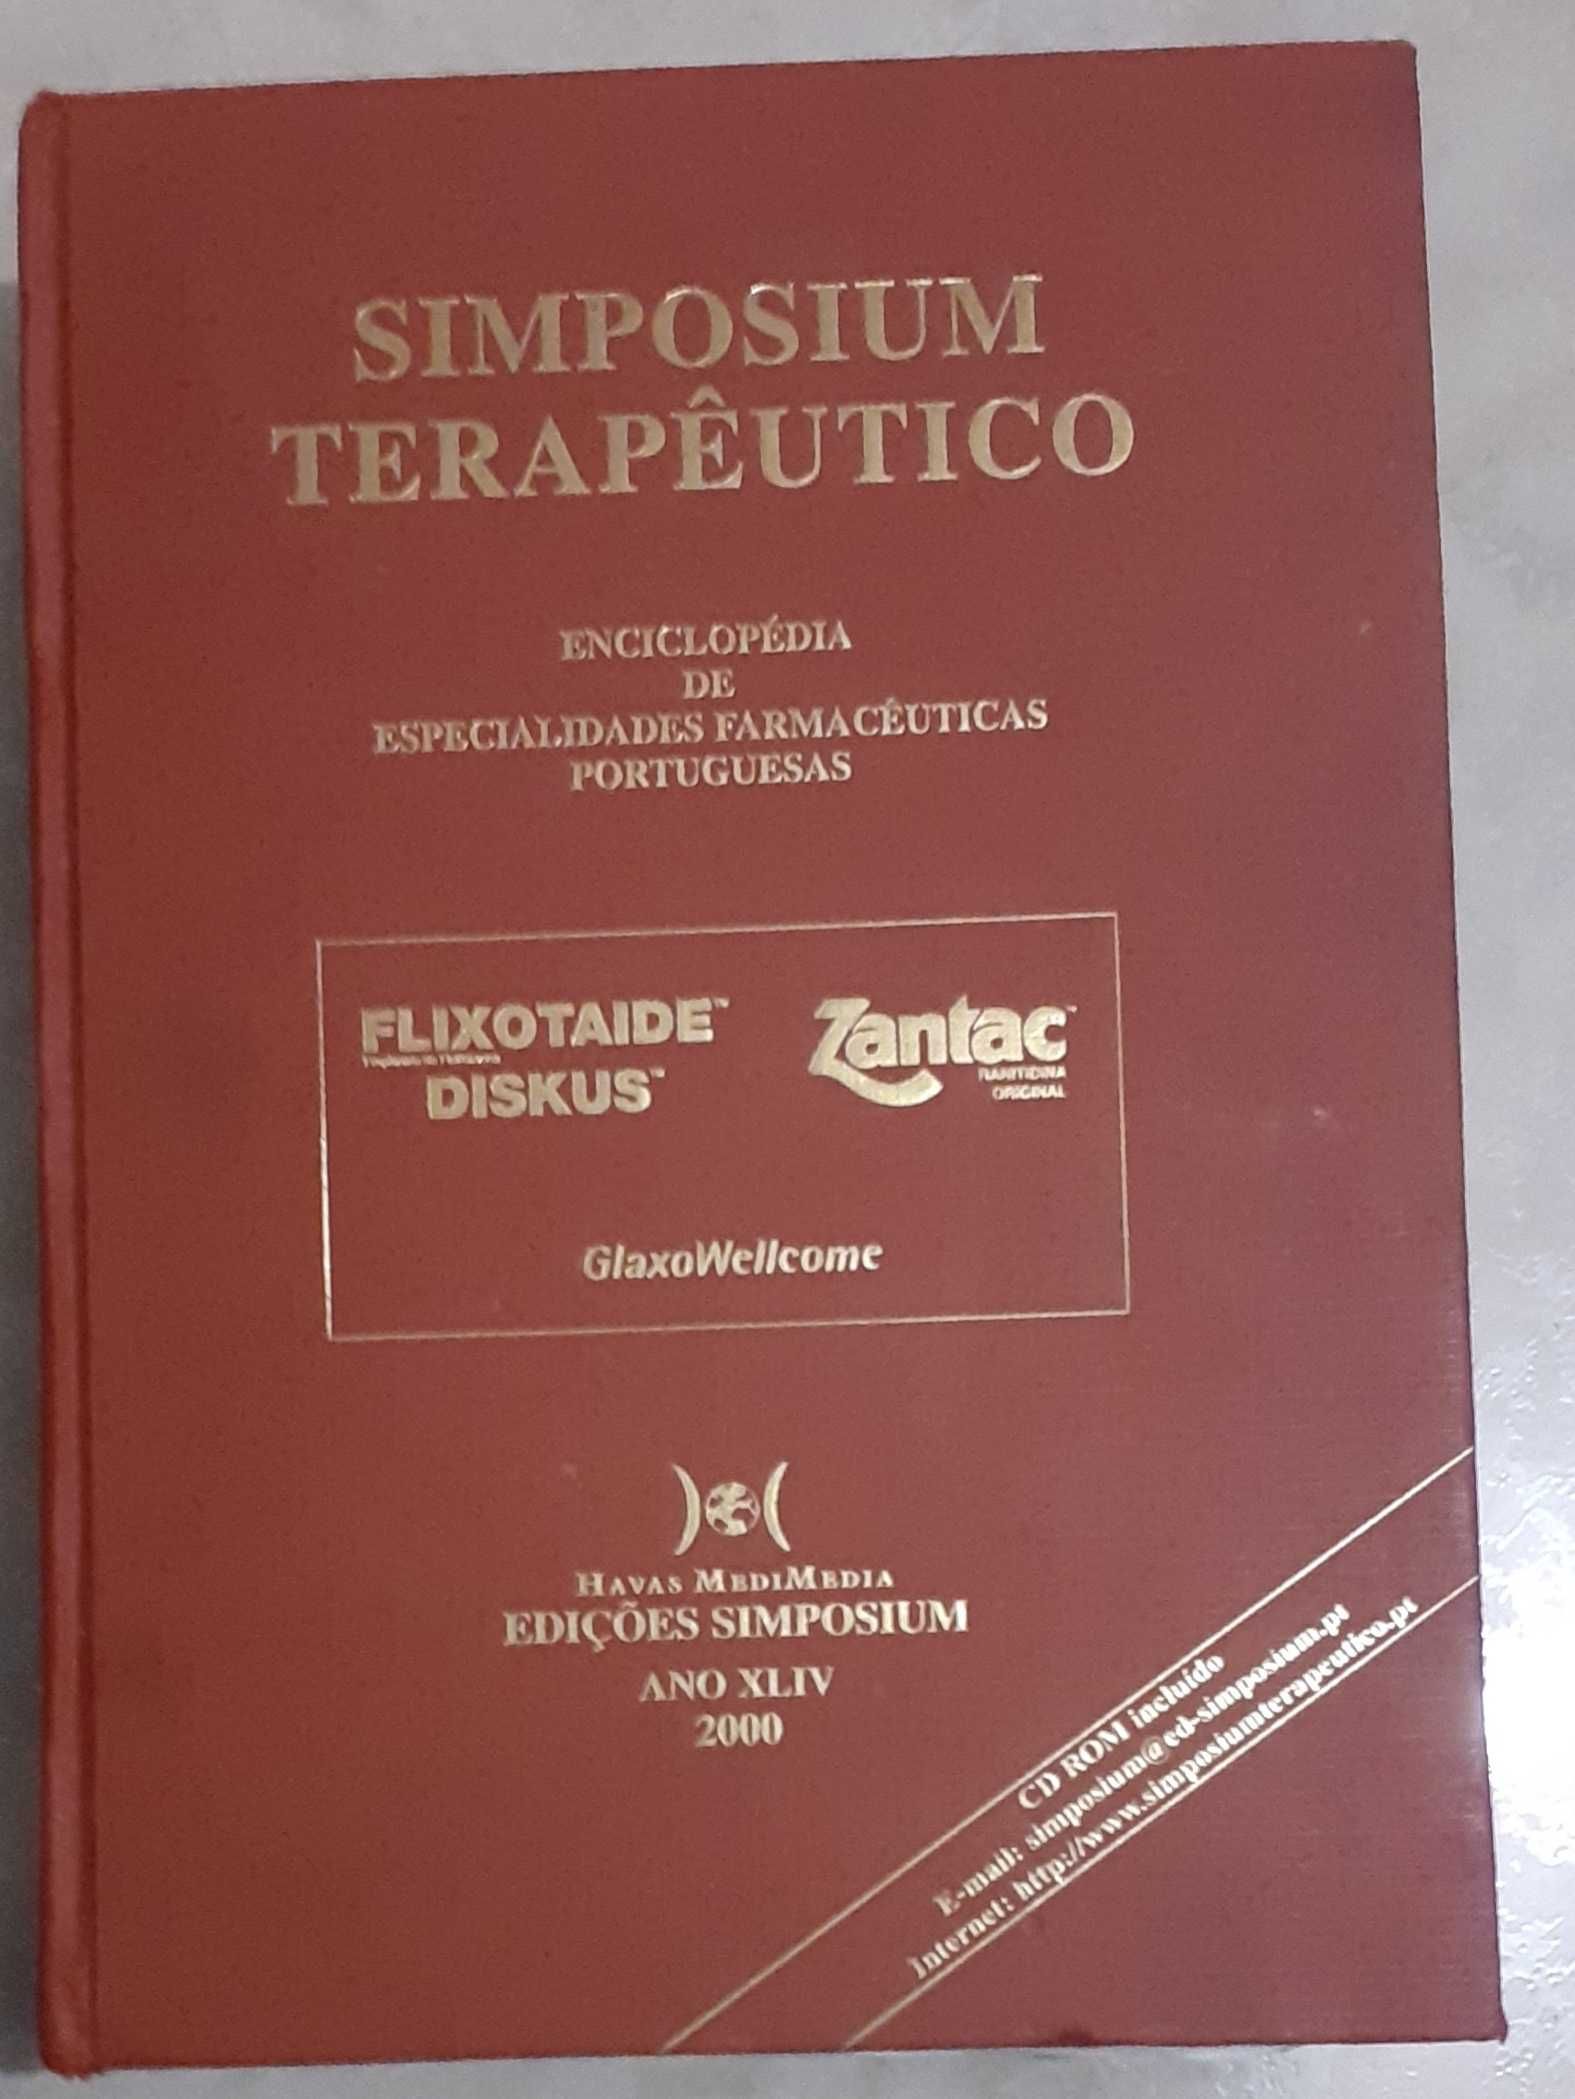 " Simposium Terapêutico Enciclopédia de Especialidades Farmacêuticas "